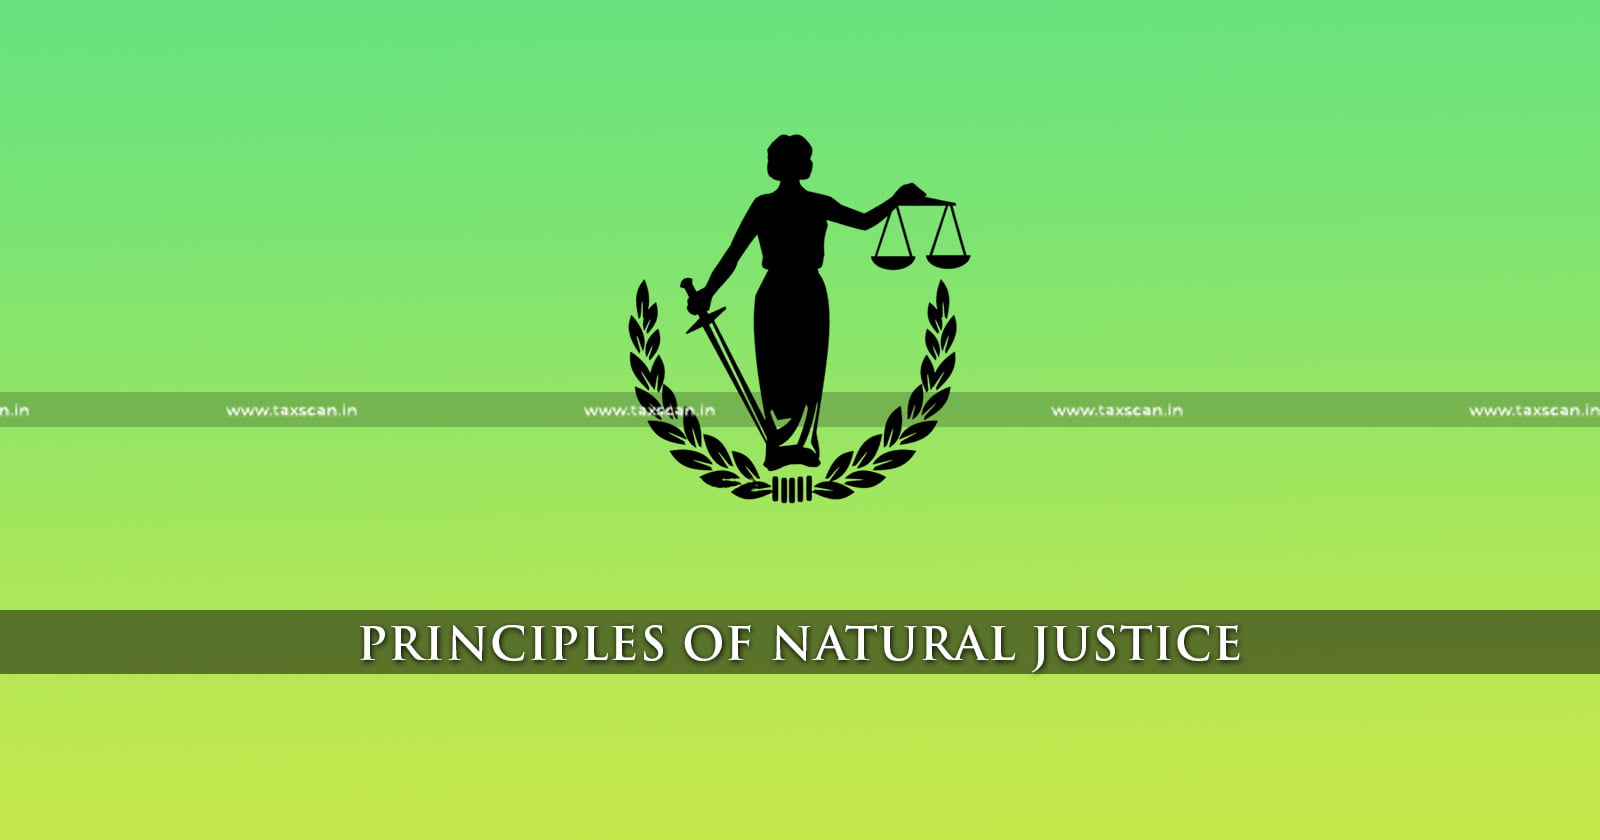 ITAT - Assessment Order - Violation of Principles of Natural Justice - taxscan